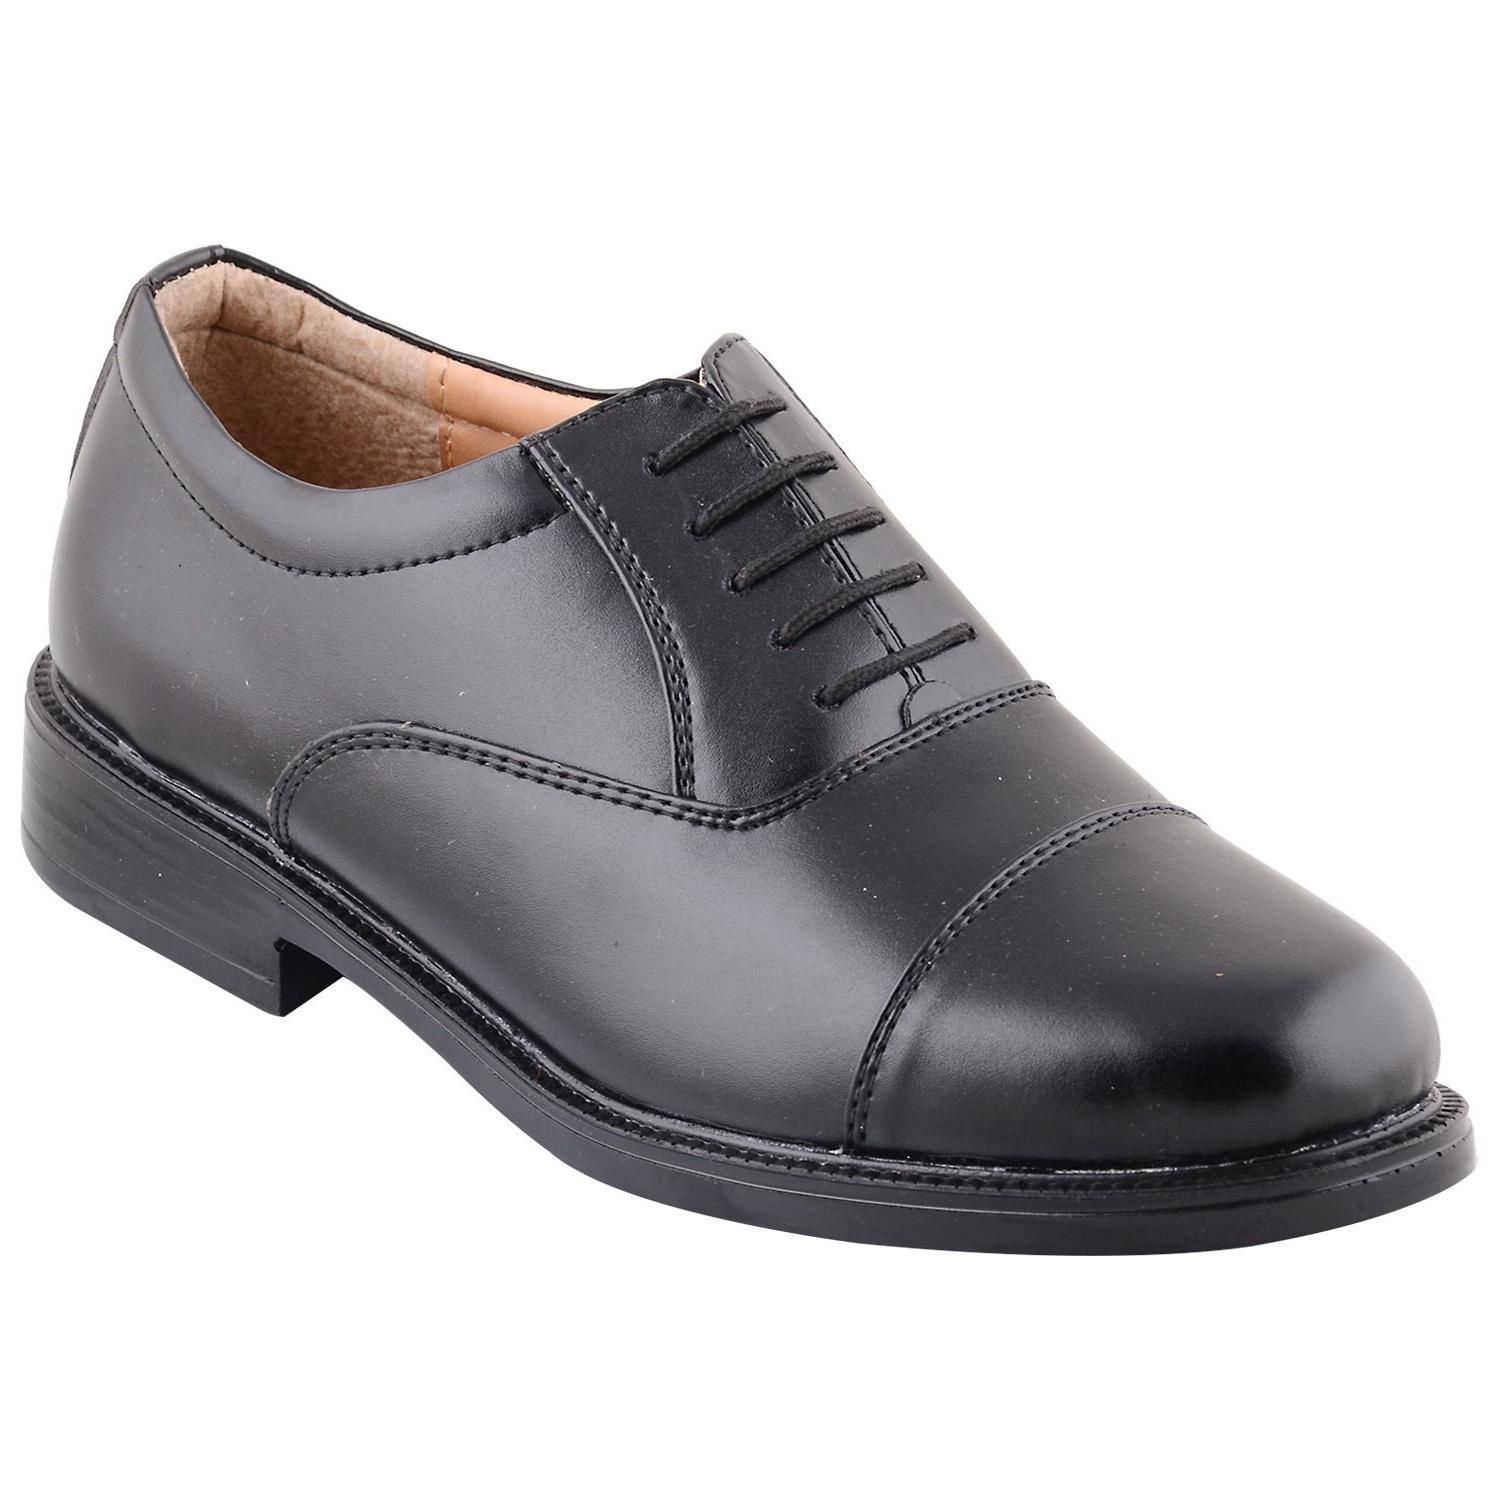 bata black leather shoes